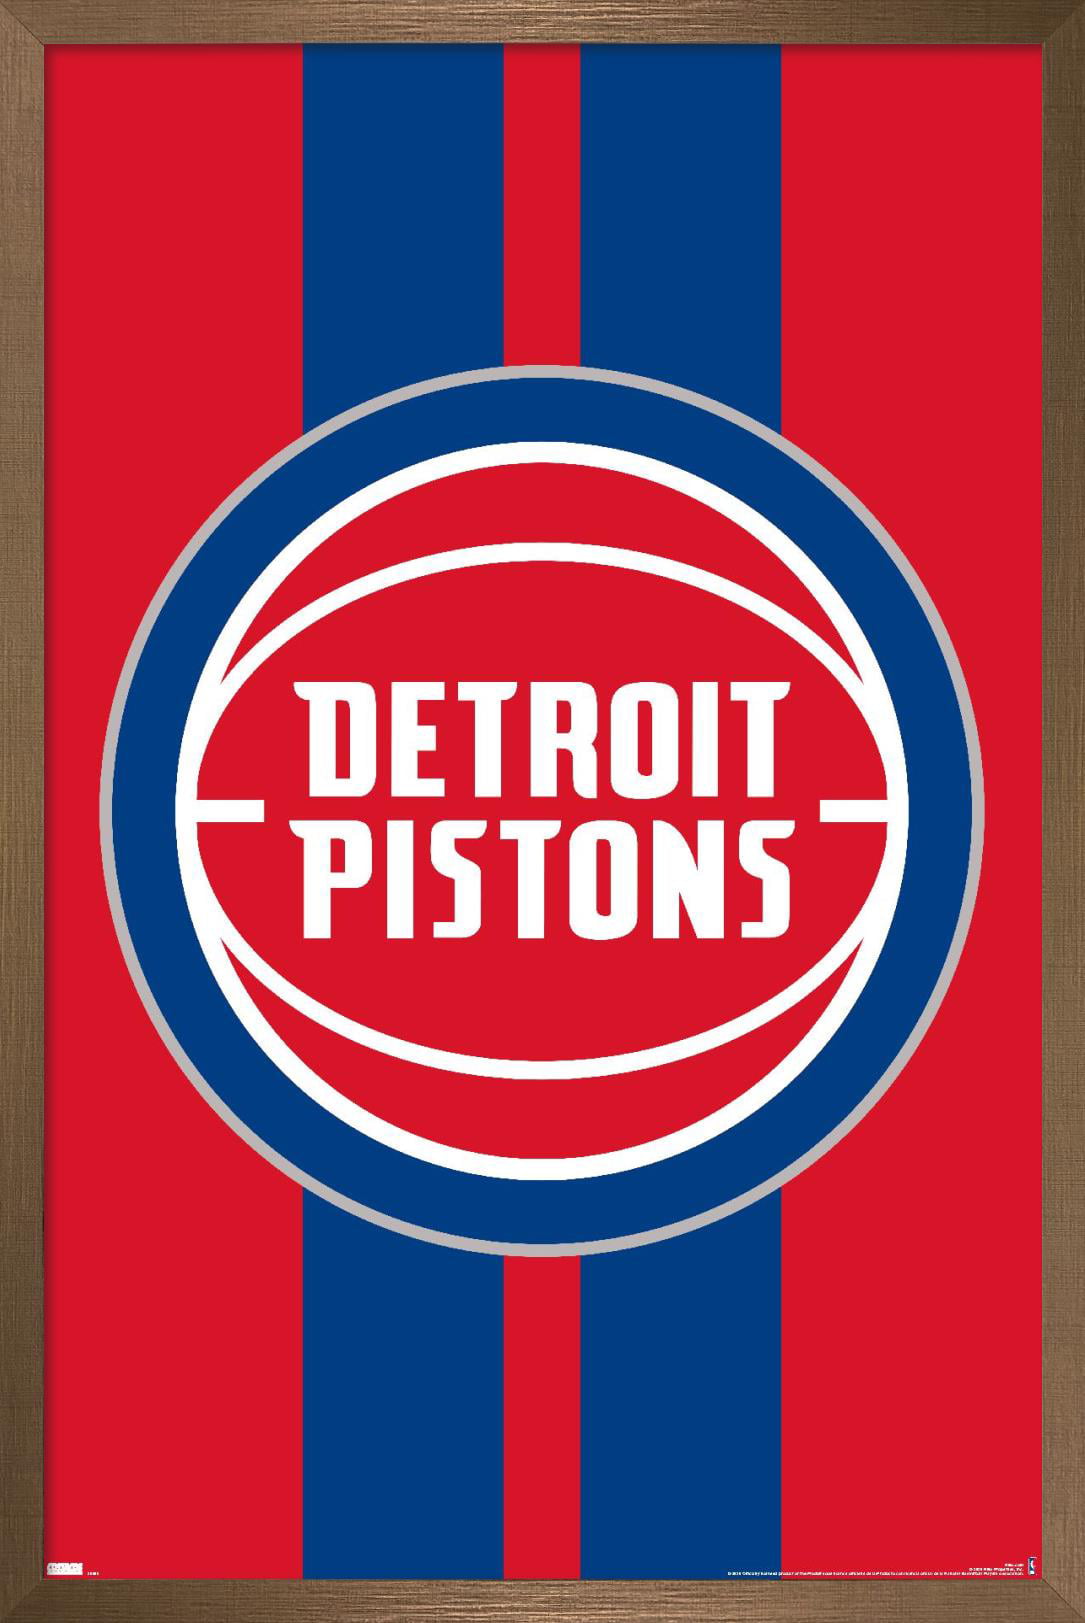 NBA Detroit Pistons - Logo 20 Wall Poster, 22.375 x 34, Framed